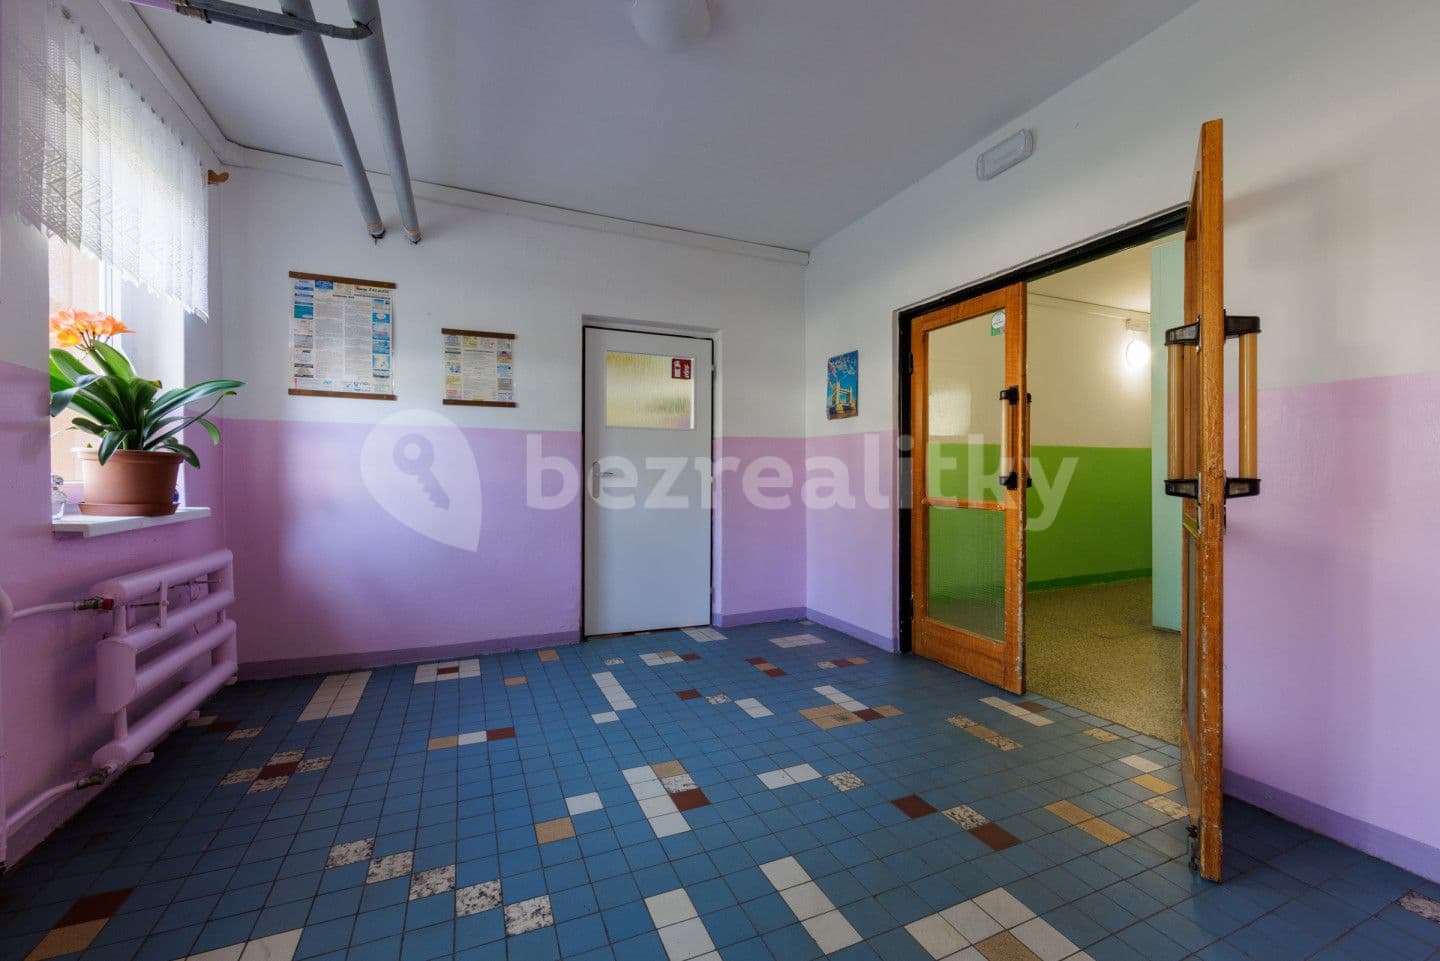 3 bedroom flat for sale, 58 m², Okružní, Nejdek, Karlovarský Region